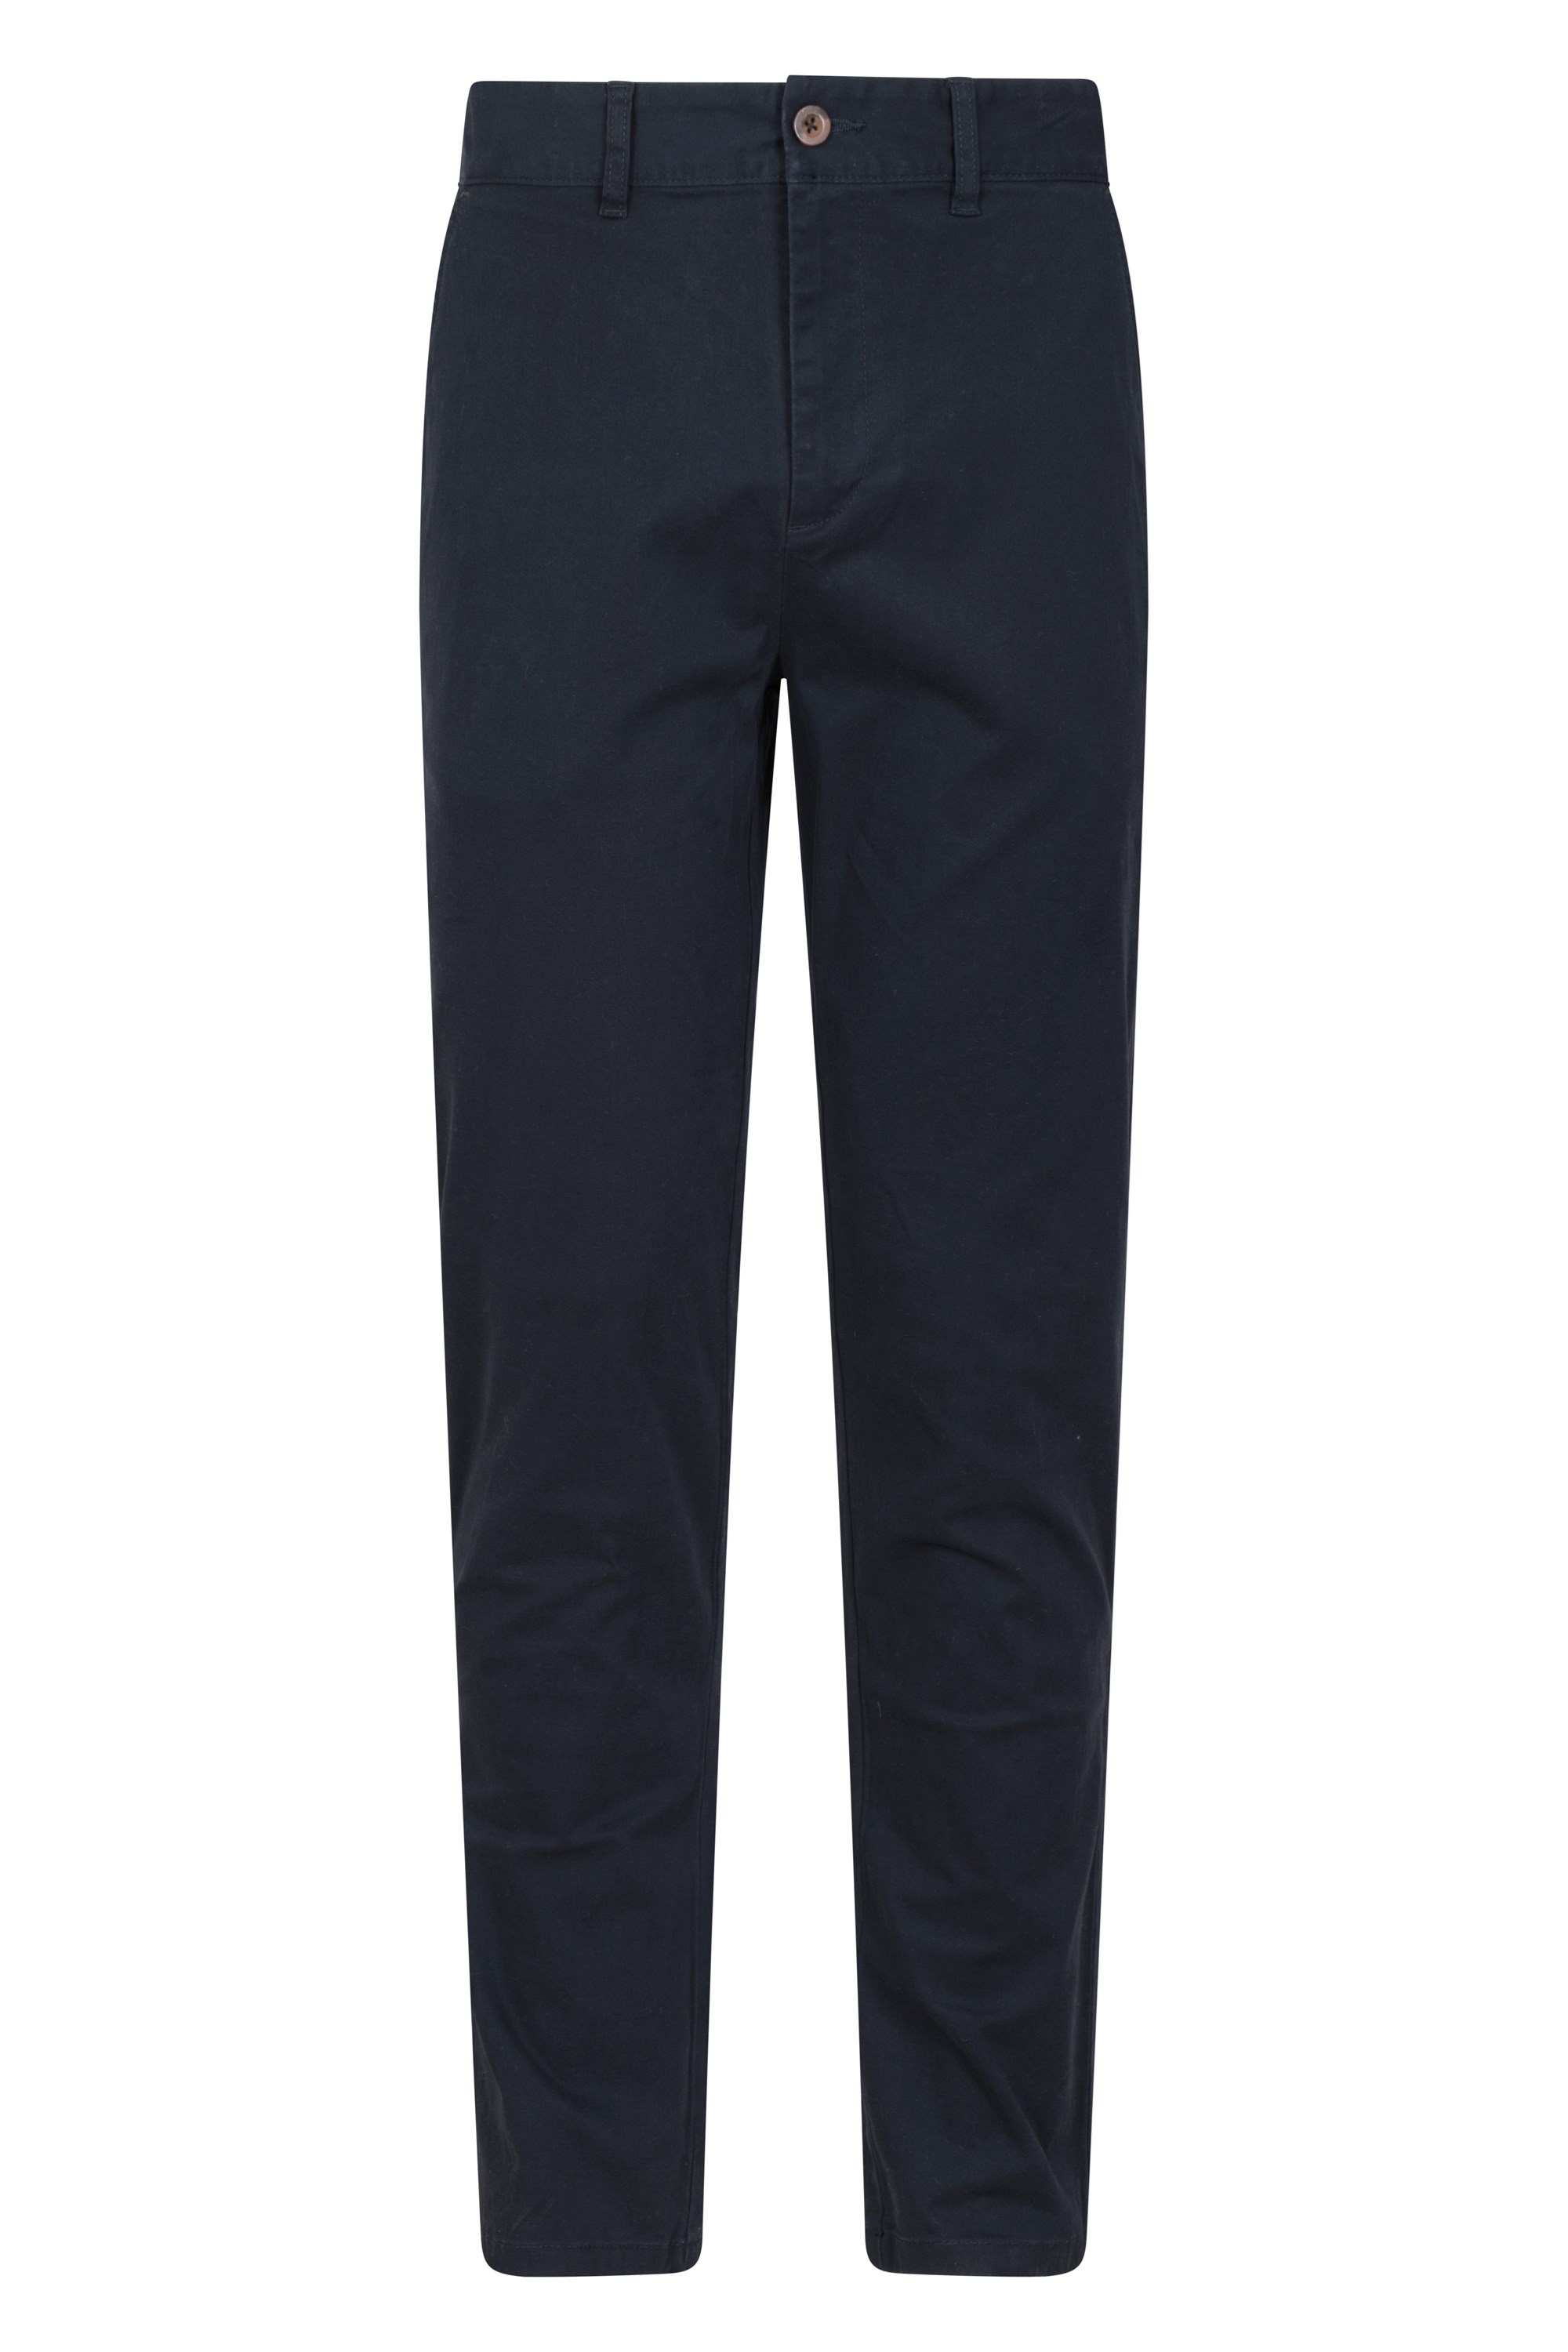 Woods Mens Organic Chino Trousers - Short Length - Dark Blue